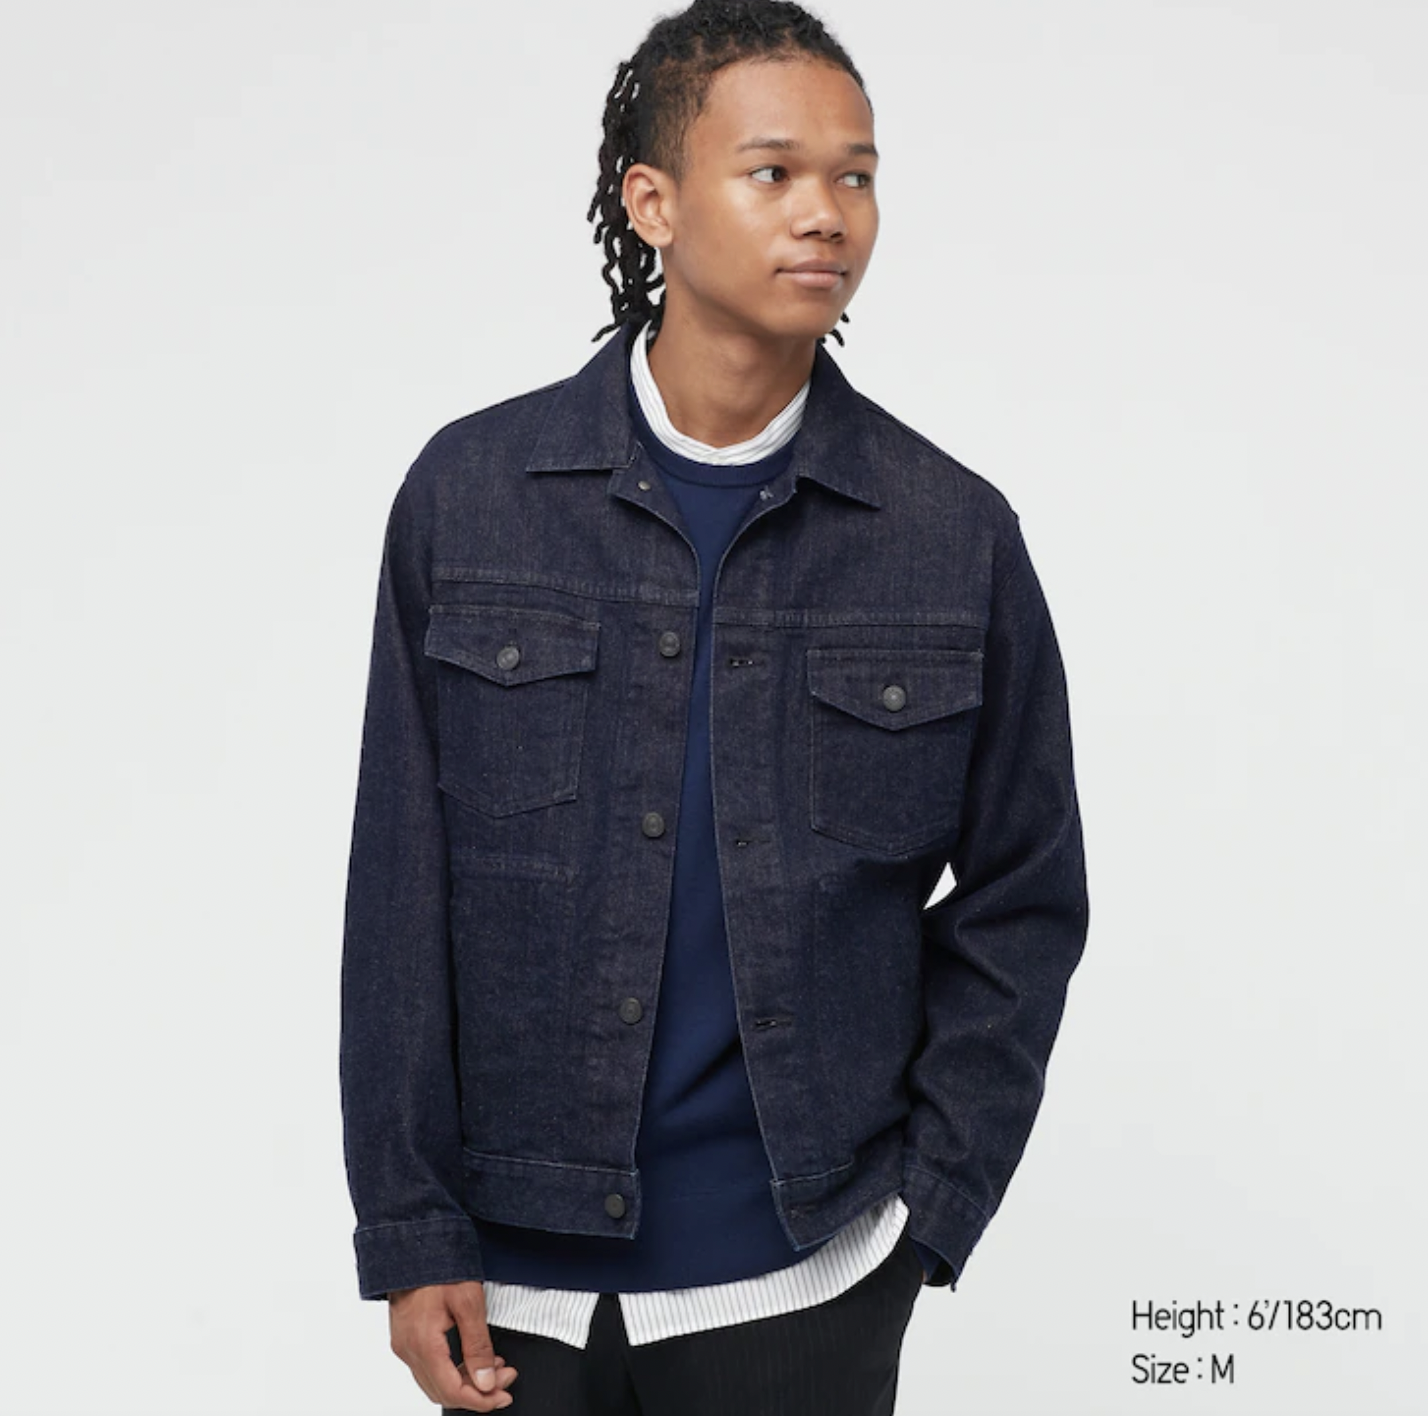 Get Lucky USA brand jean jacket jeweled rhinestone coat denim size s small  | eBay